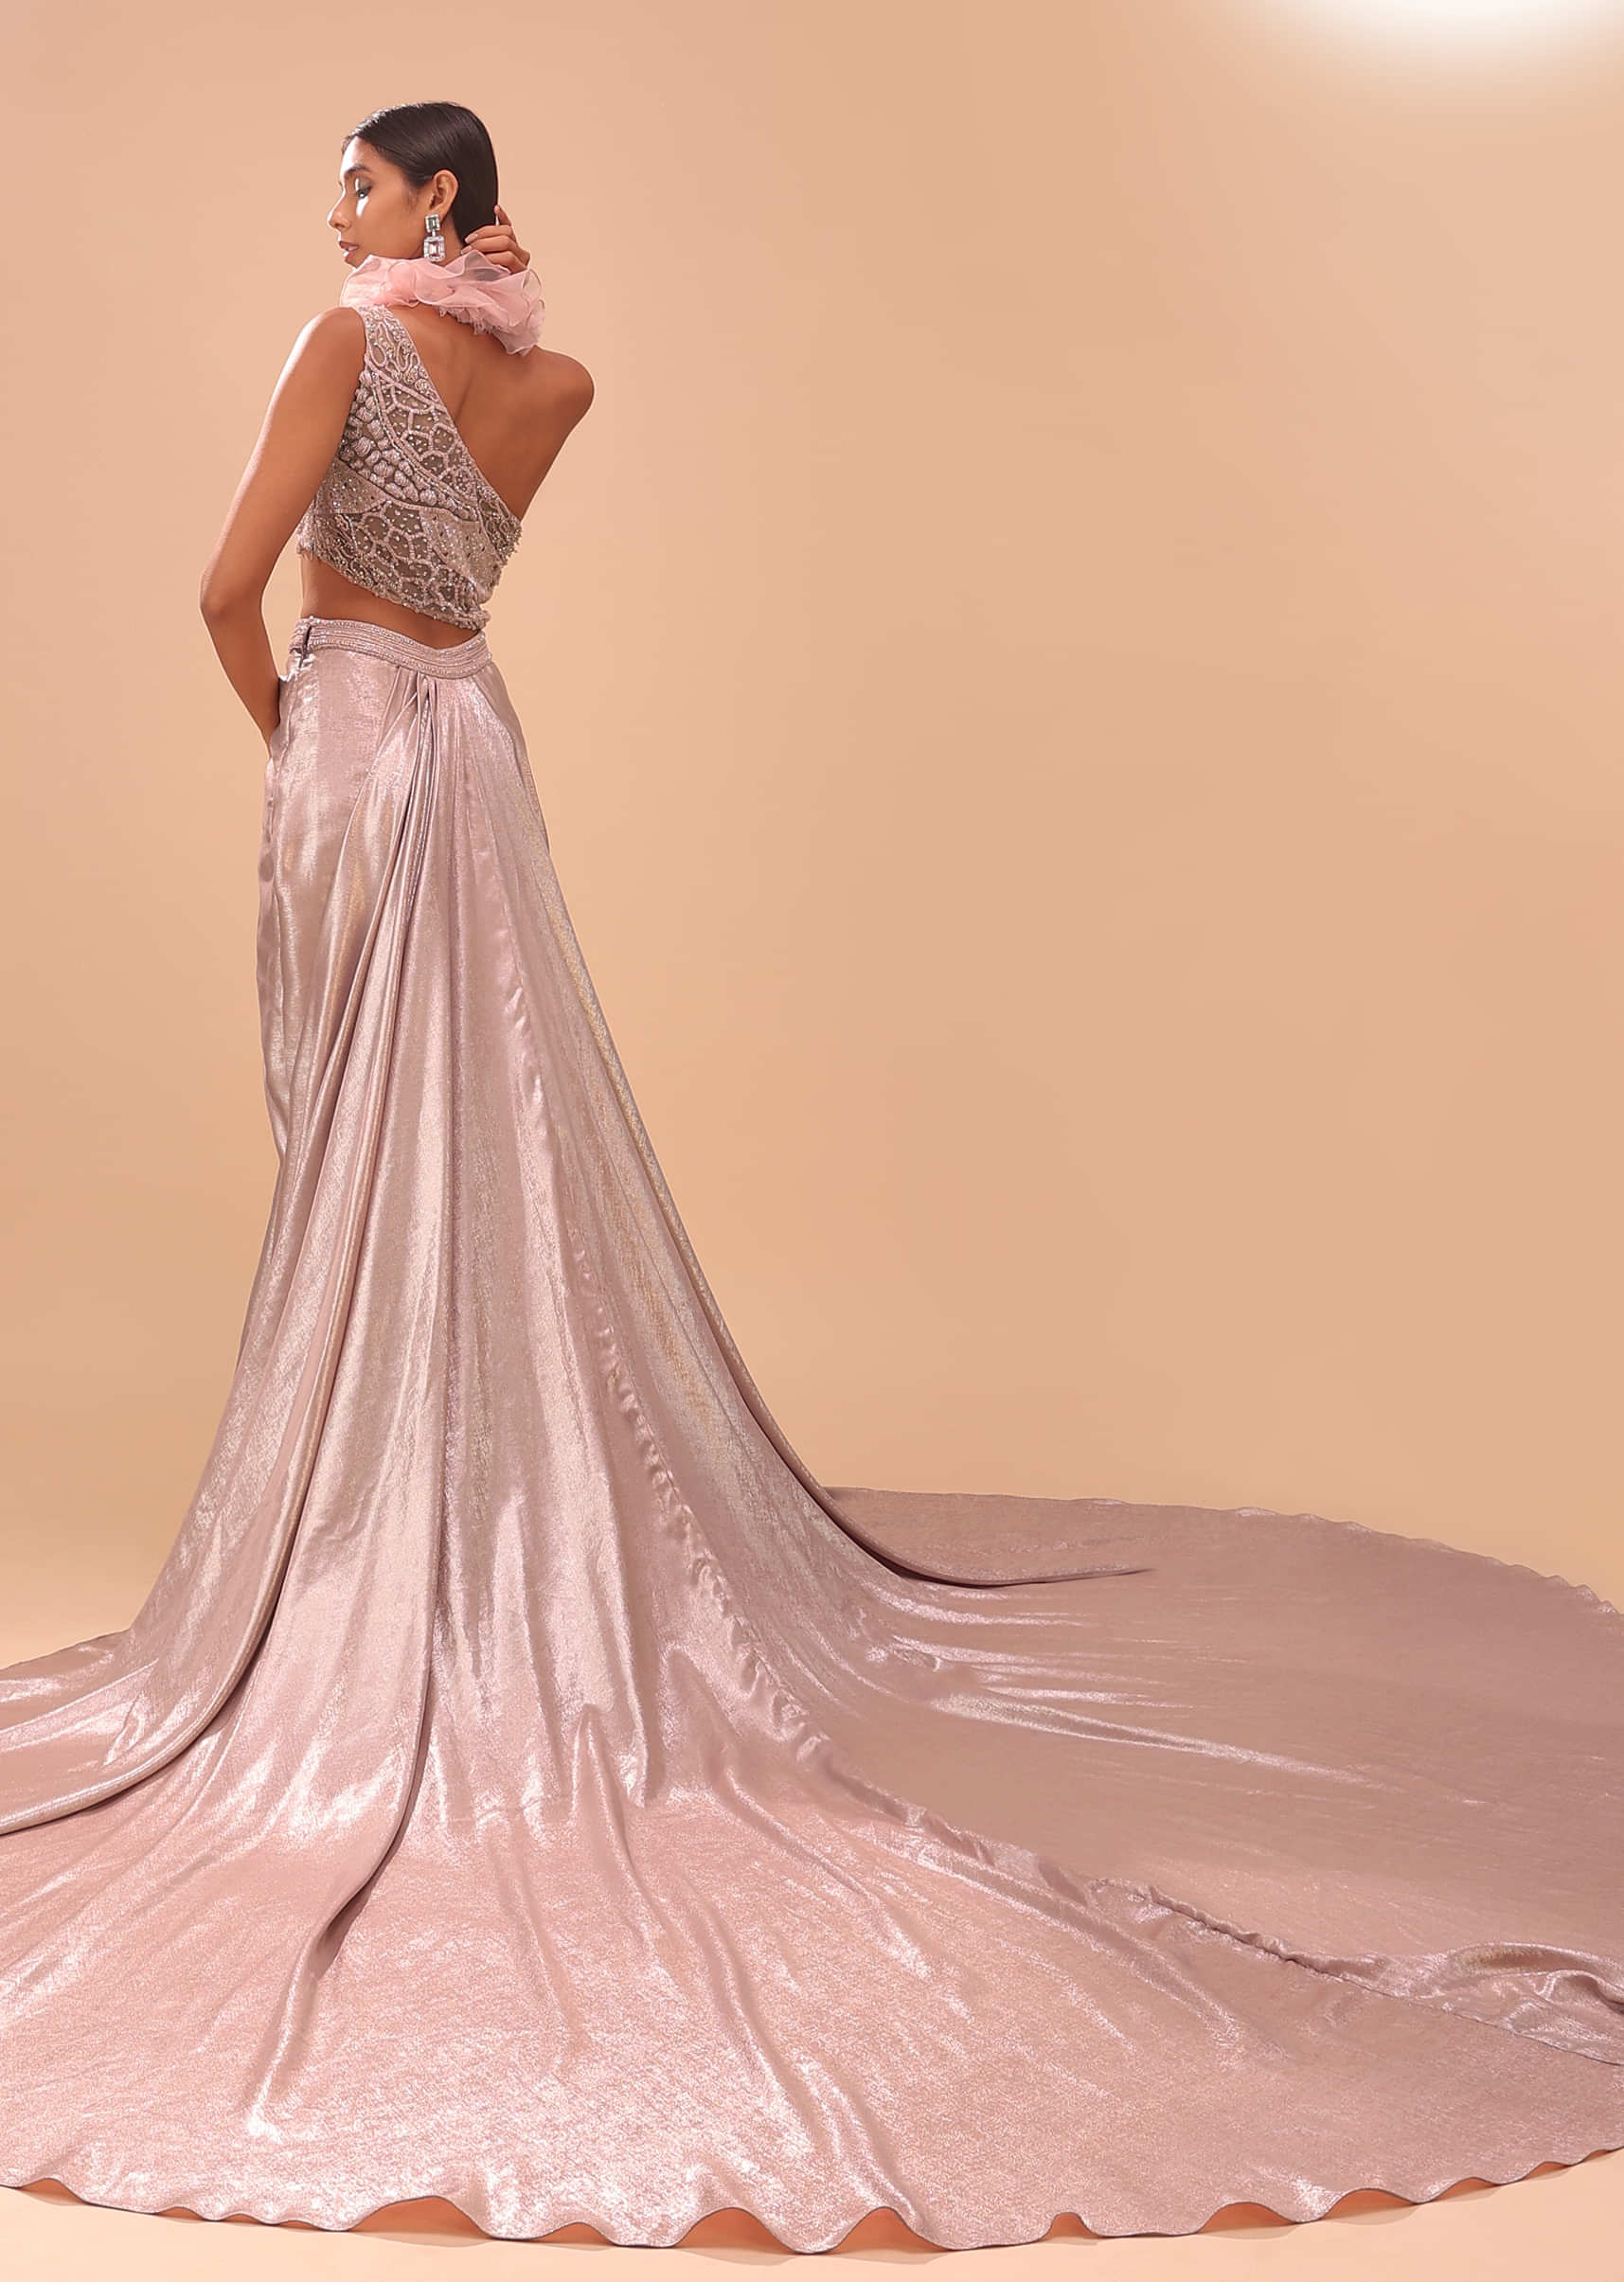 Sparkly Silver Gown Silver Dress Silver Ballgown Wedding -  Israel